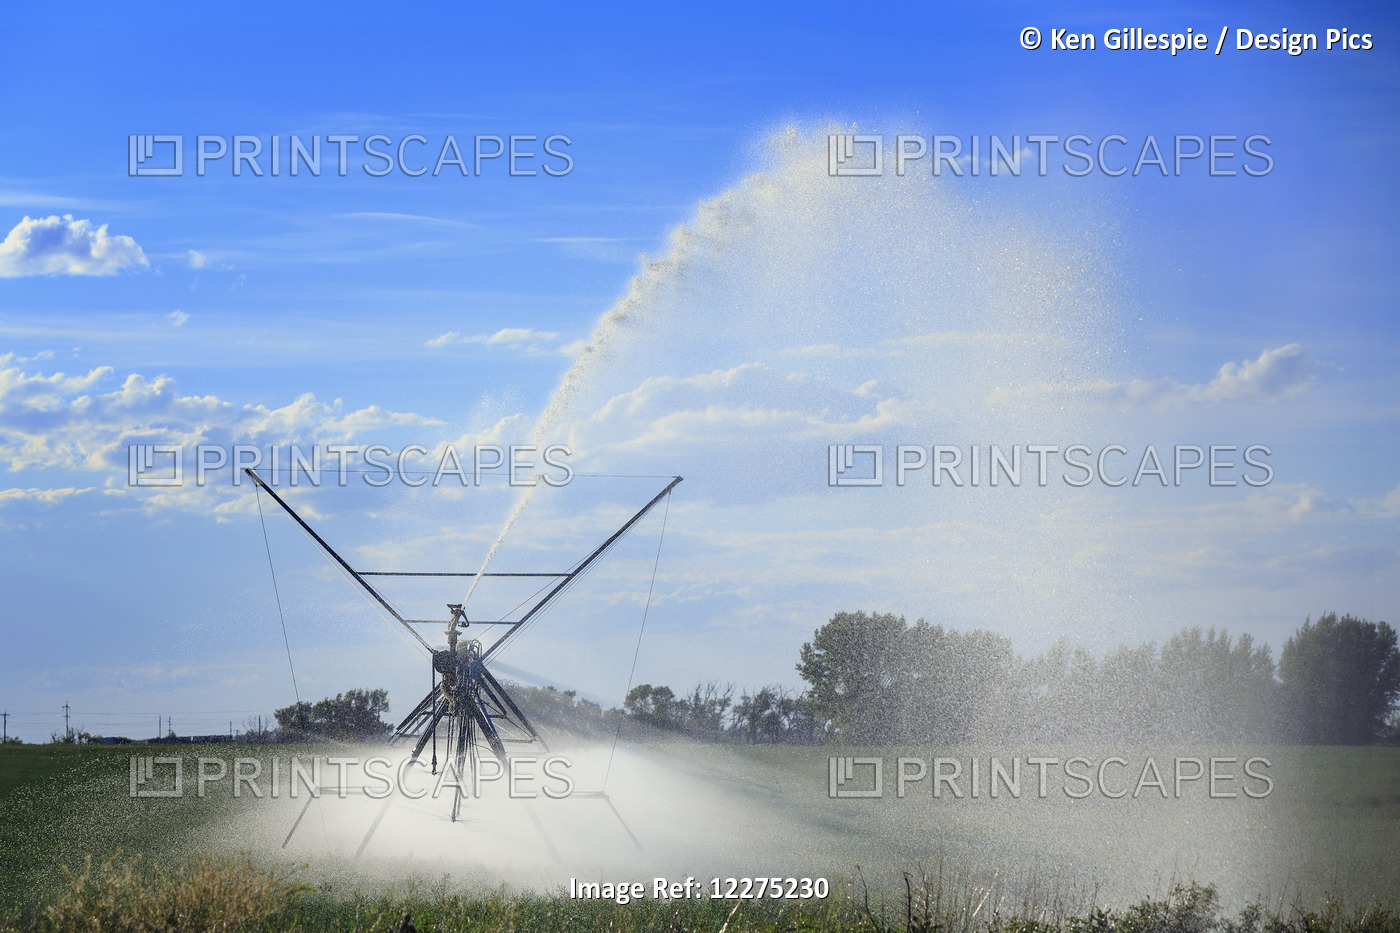 Center Pivot Irrigation Spraying Water, Near Lethbridge; Alberta, Canada